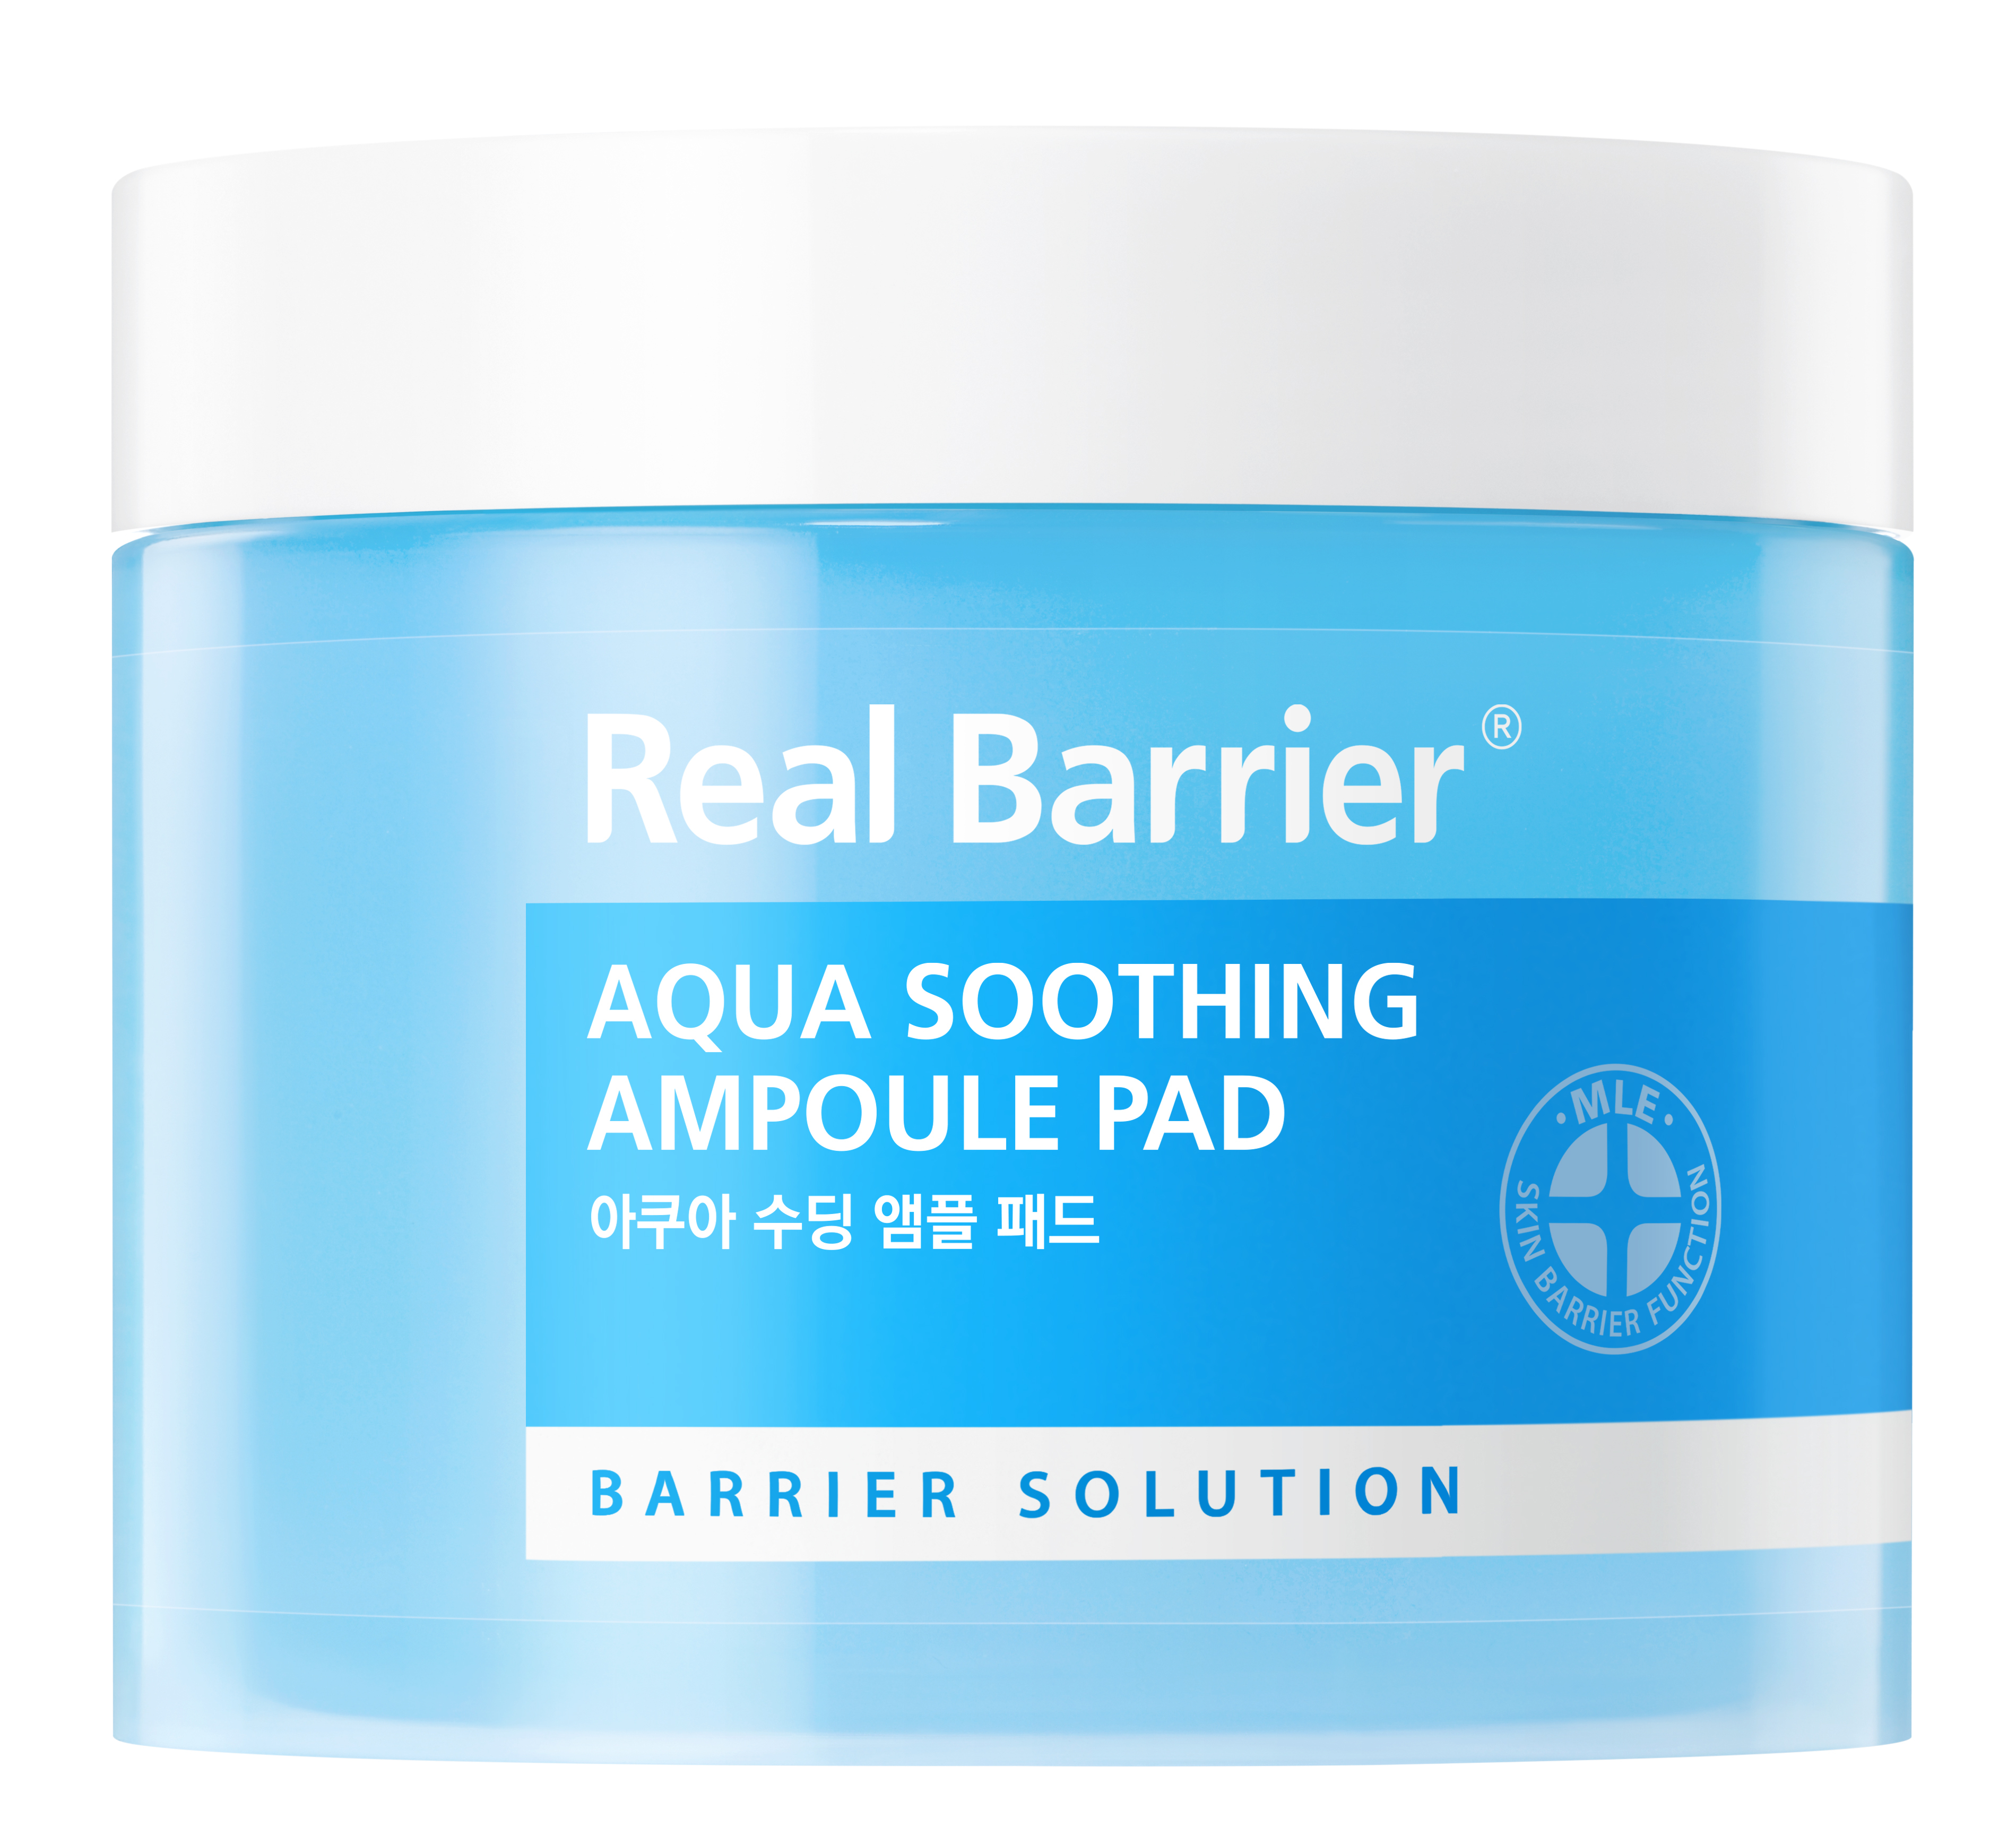 фото Увлажняющие тонер-пэды для лица real barrier aqua soothing ampoule pad 70 шт 90 мл